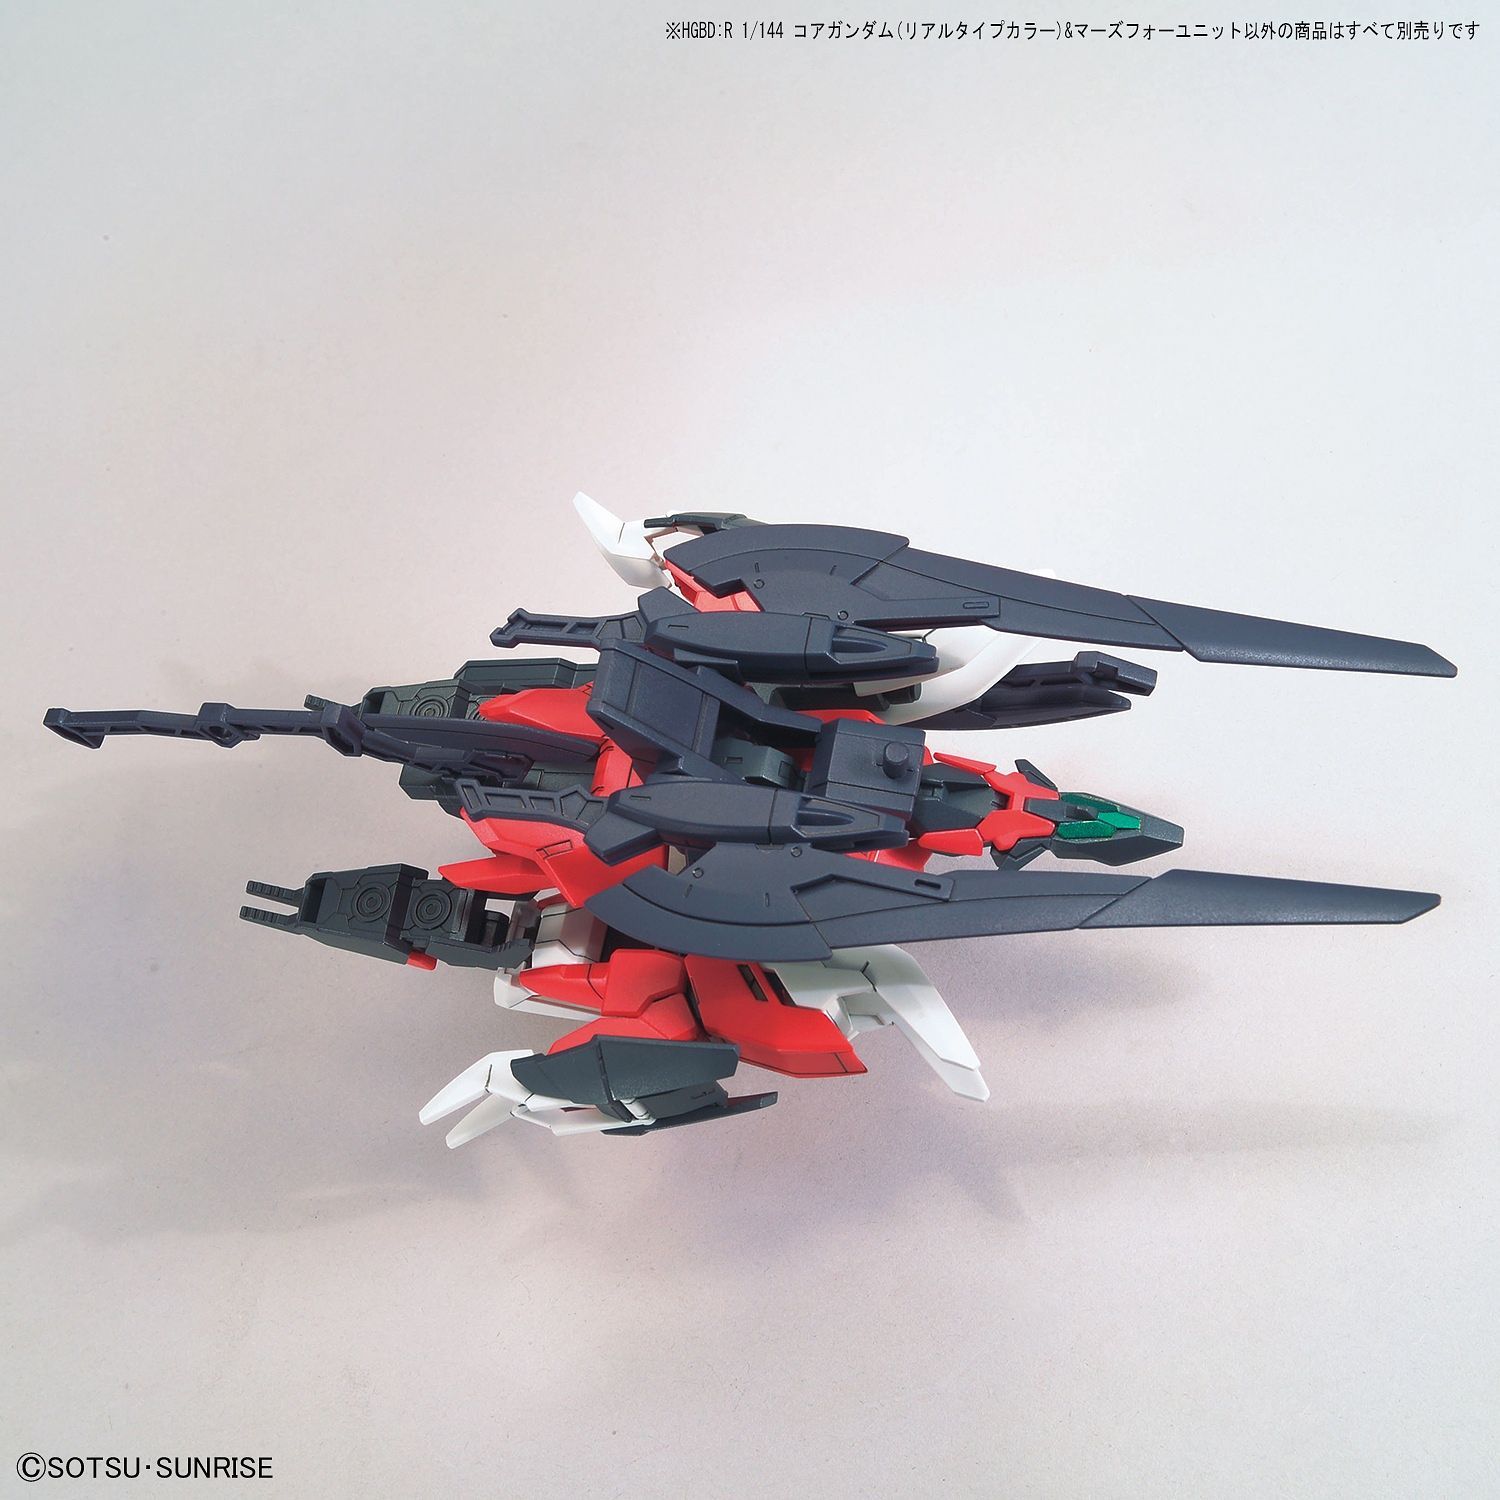 HG Gundam Core (Real Type Color) & Marsfour Unit 1/144 - gundam-store.dk